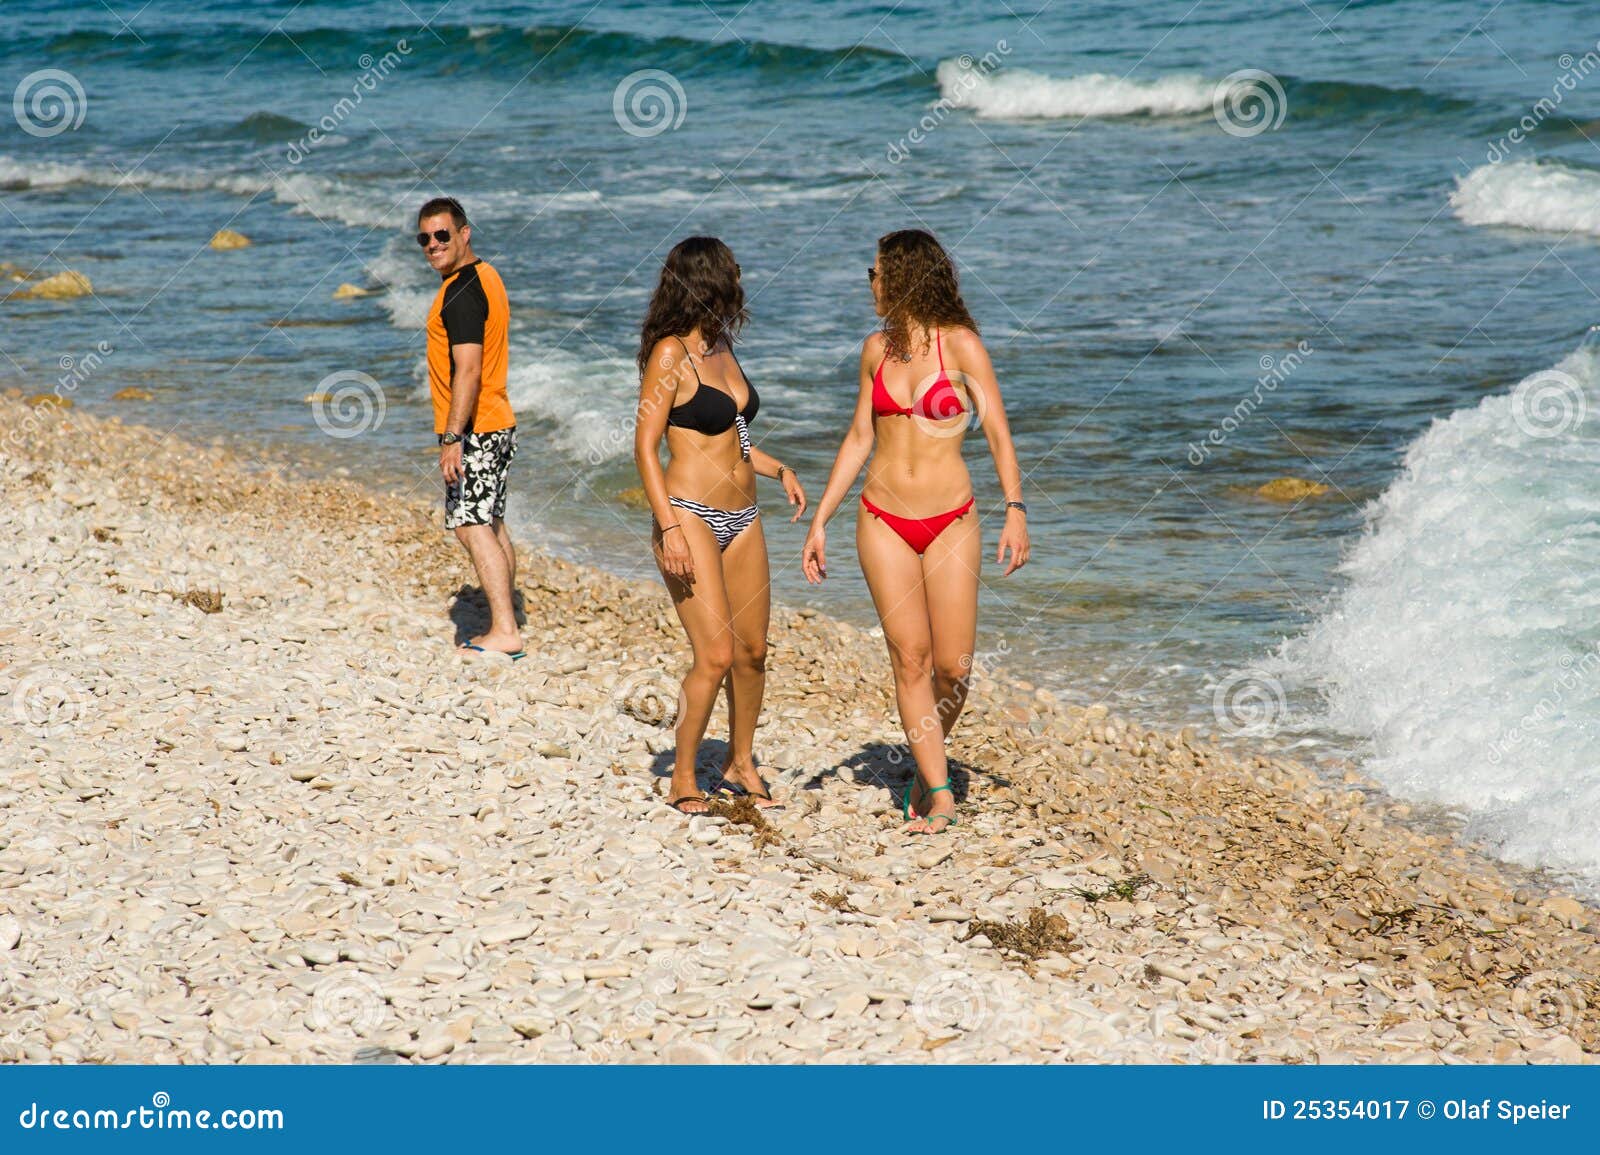 naked teen beach voyeur